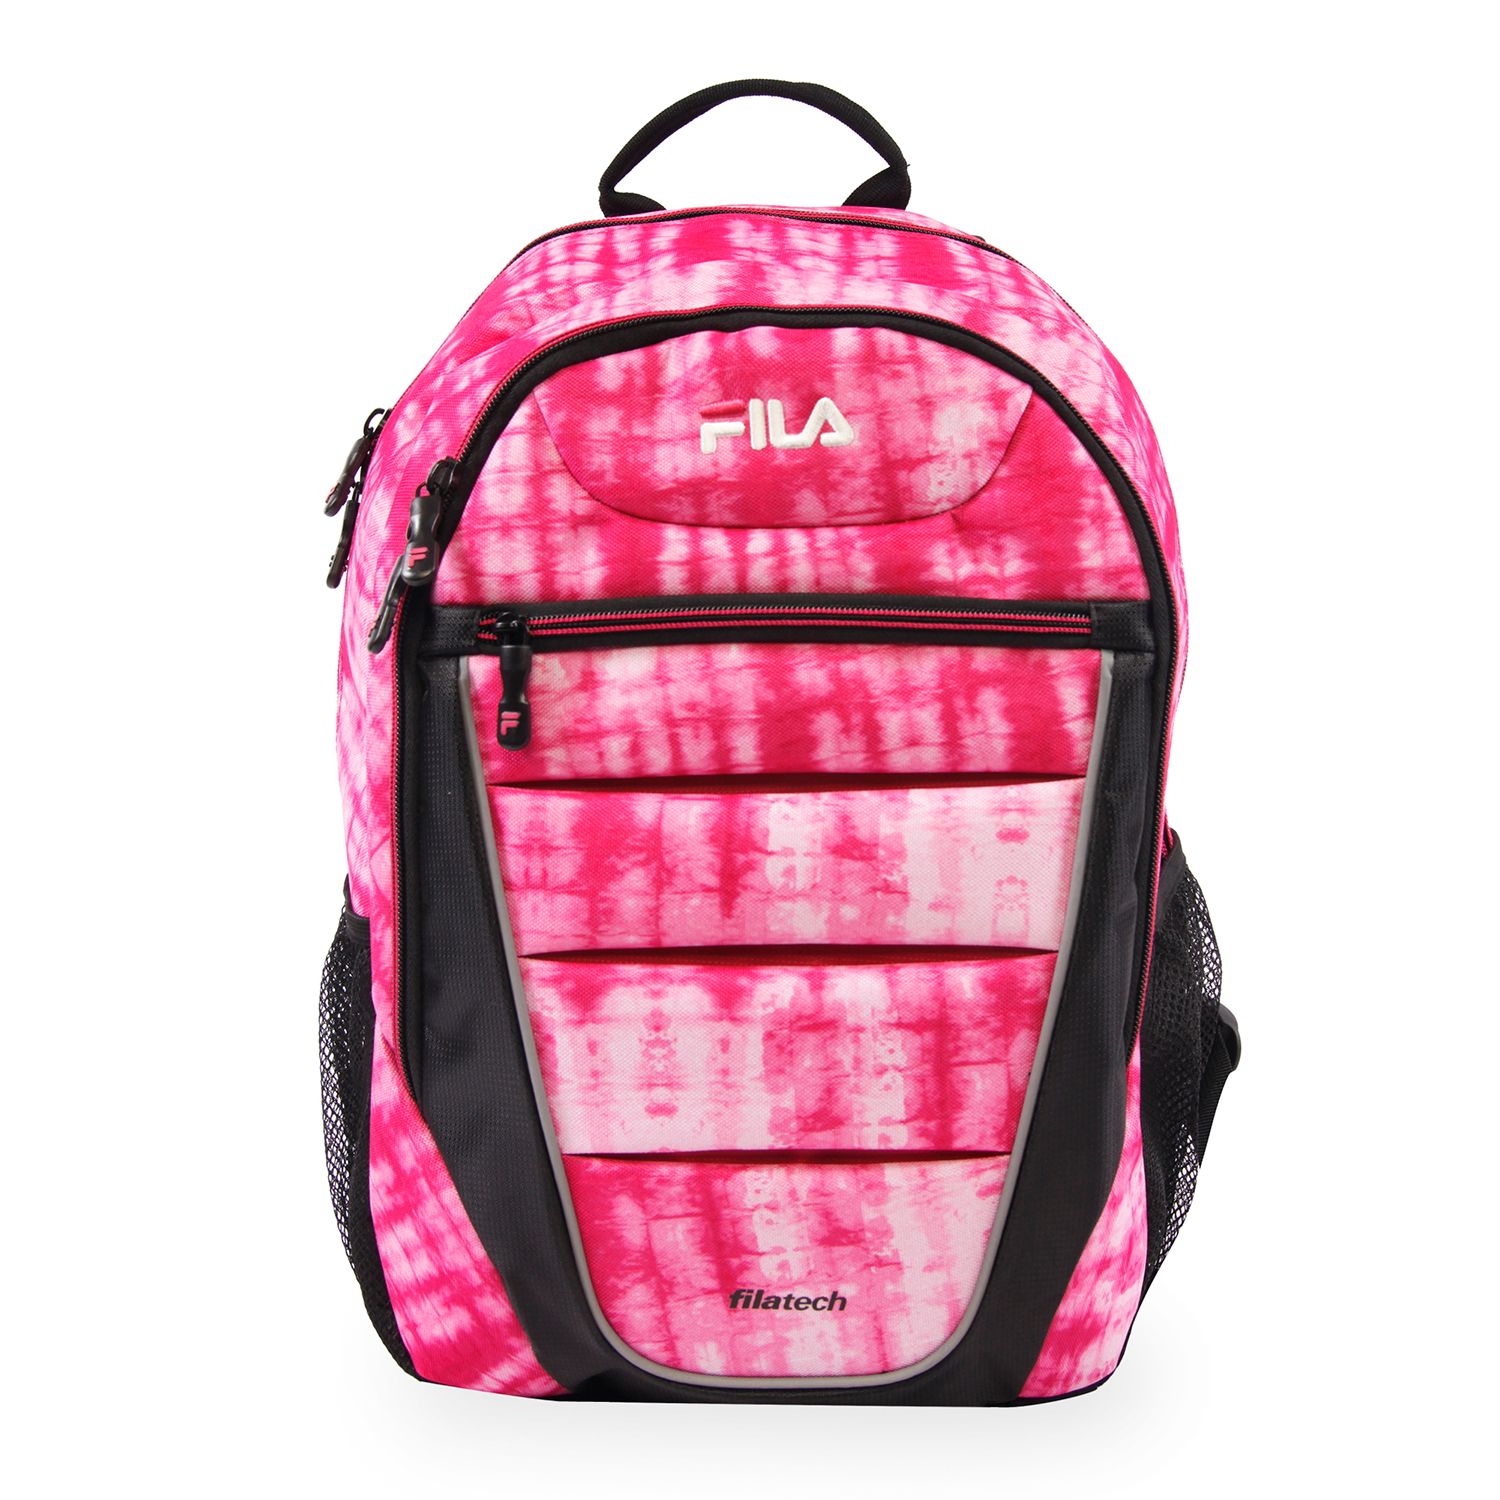 fila backpack for sale